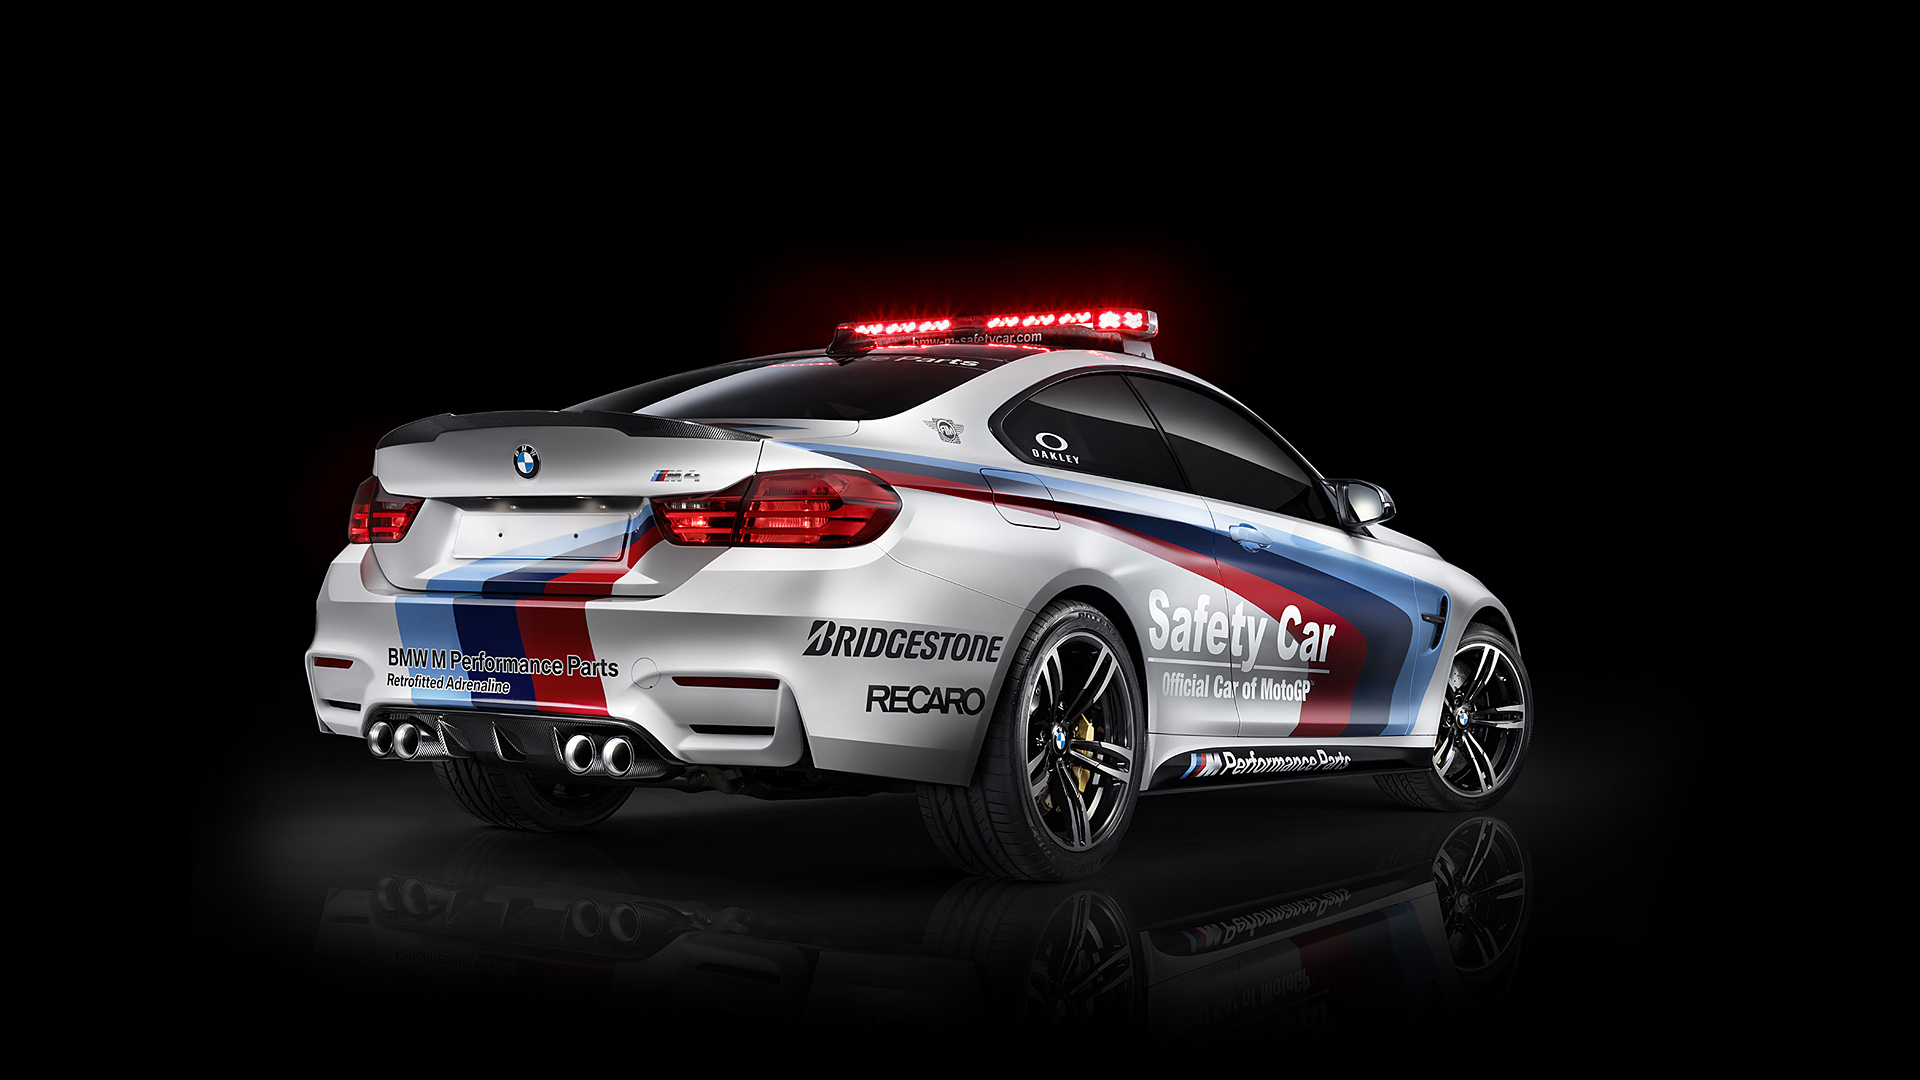  2014 BMW M4 Coupe MotoGP Safety Car Wallpaper.